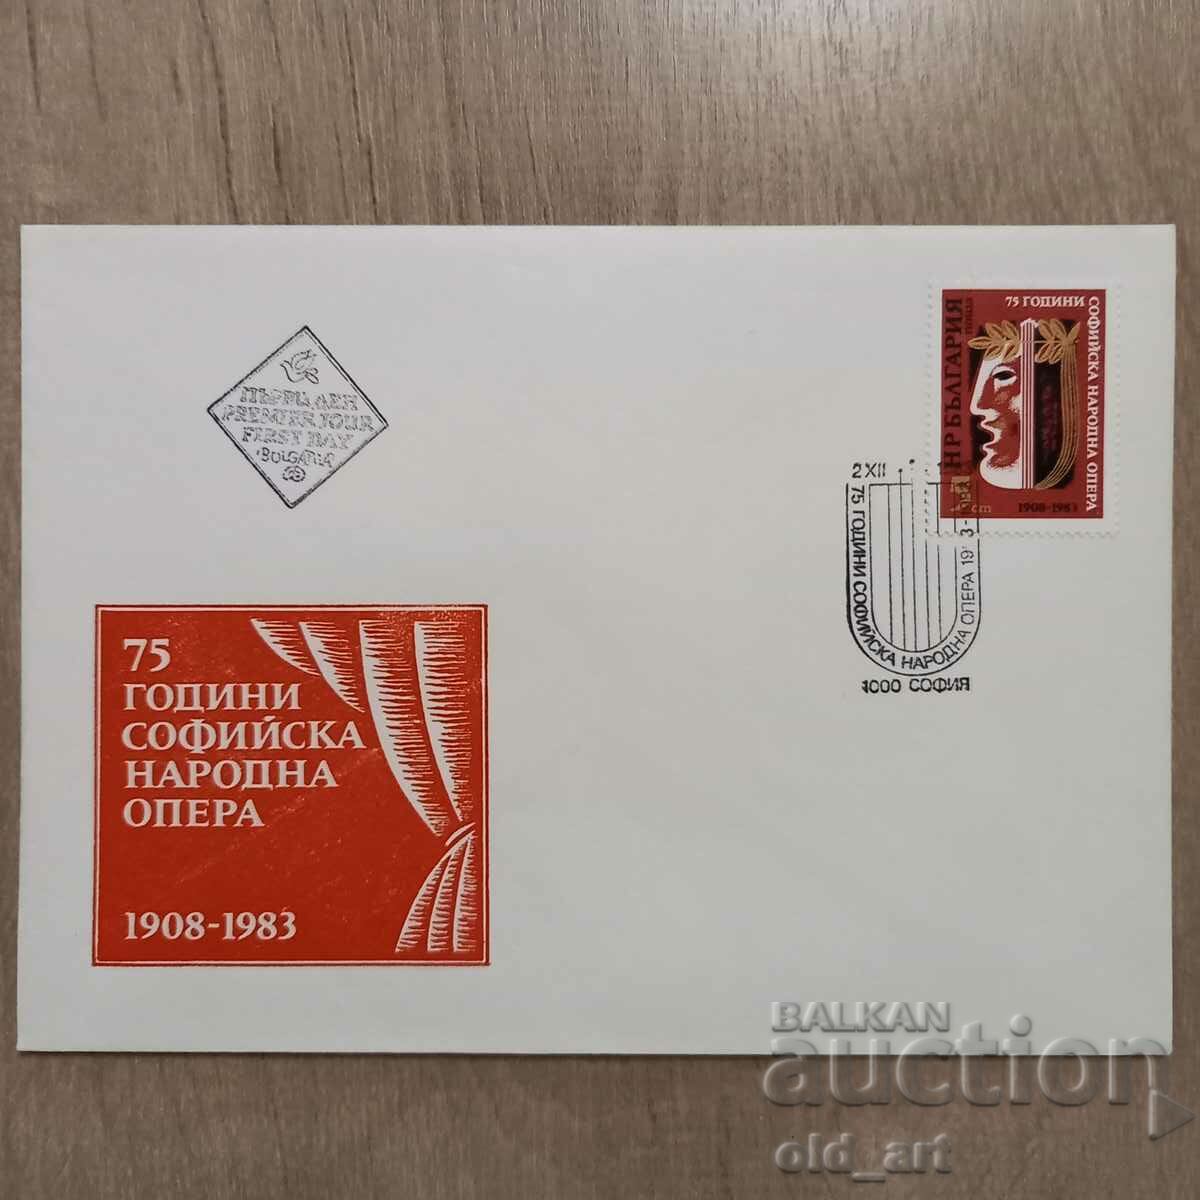 Postal envelope - 75 Sofia National Opera